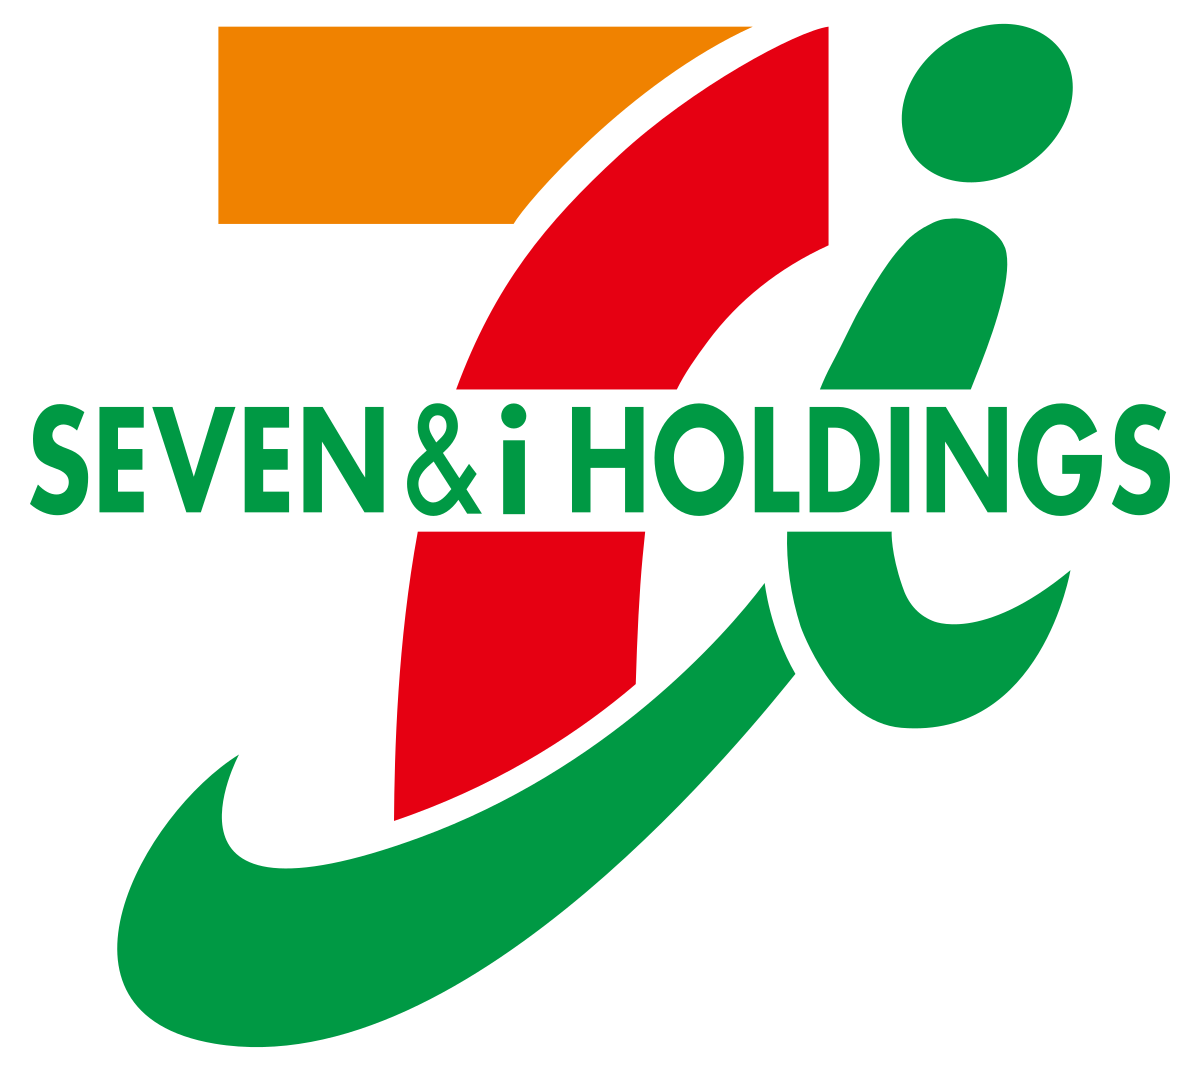 Seven & I Holdings - Wikipedia